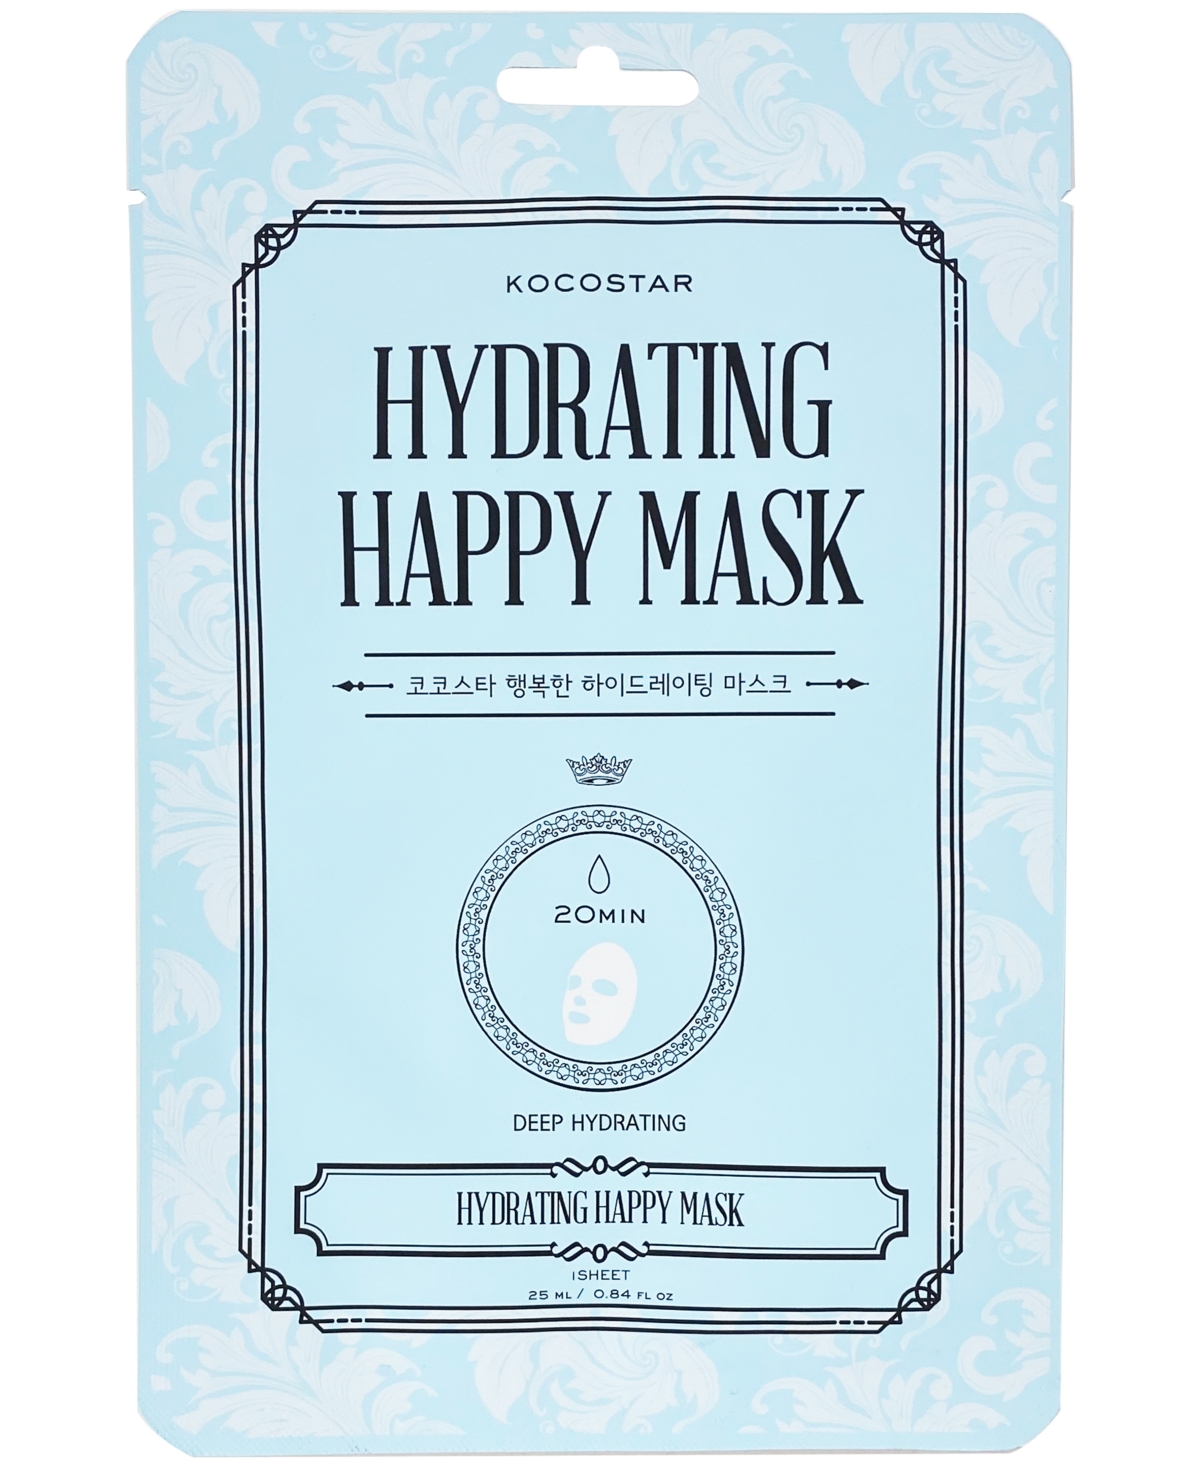 Hydrating Happy Mask, 10-Pk.